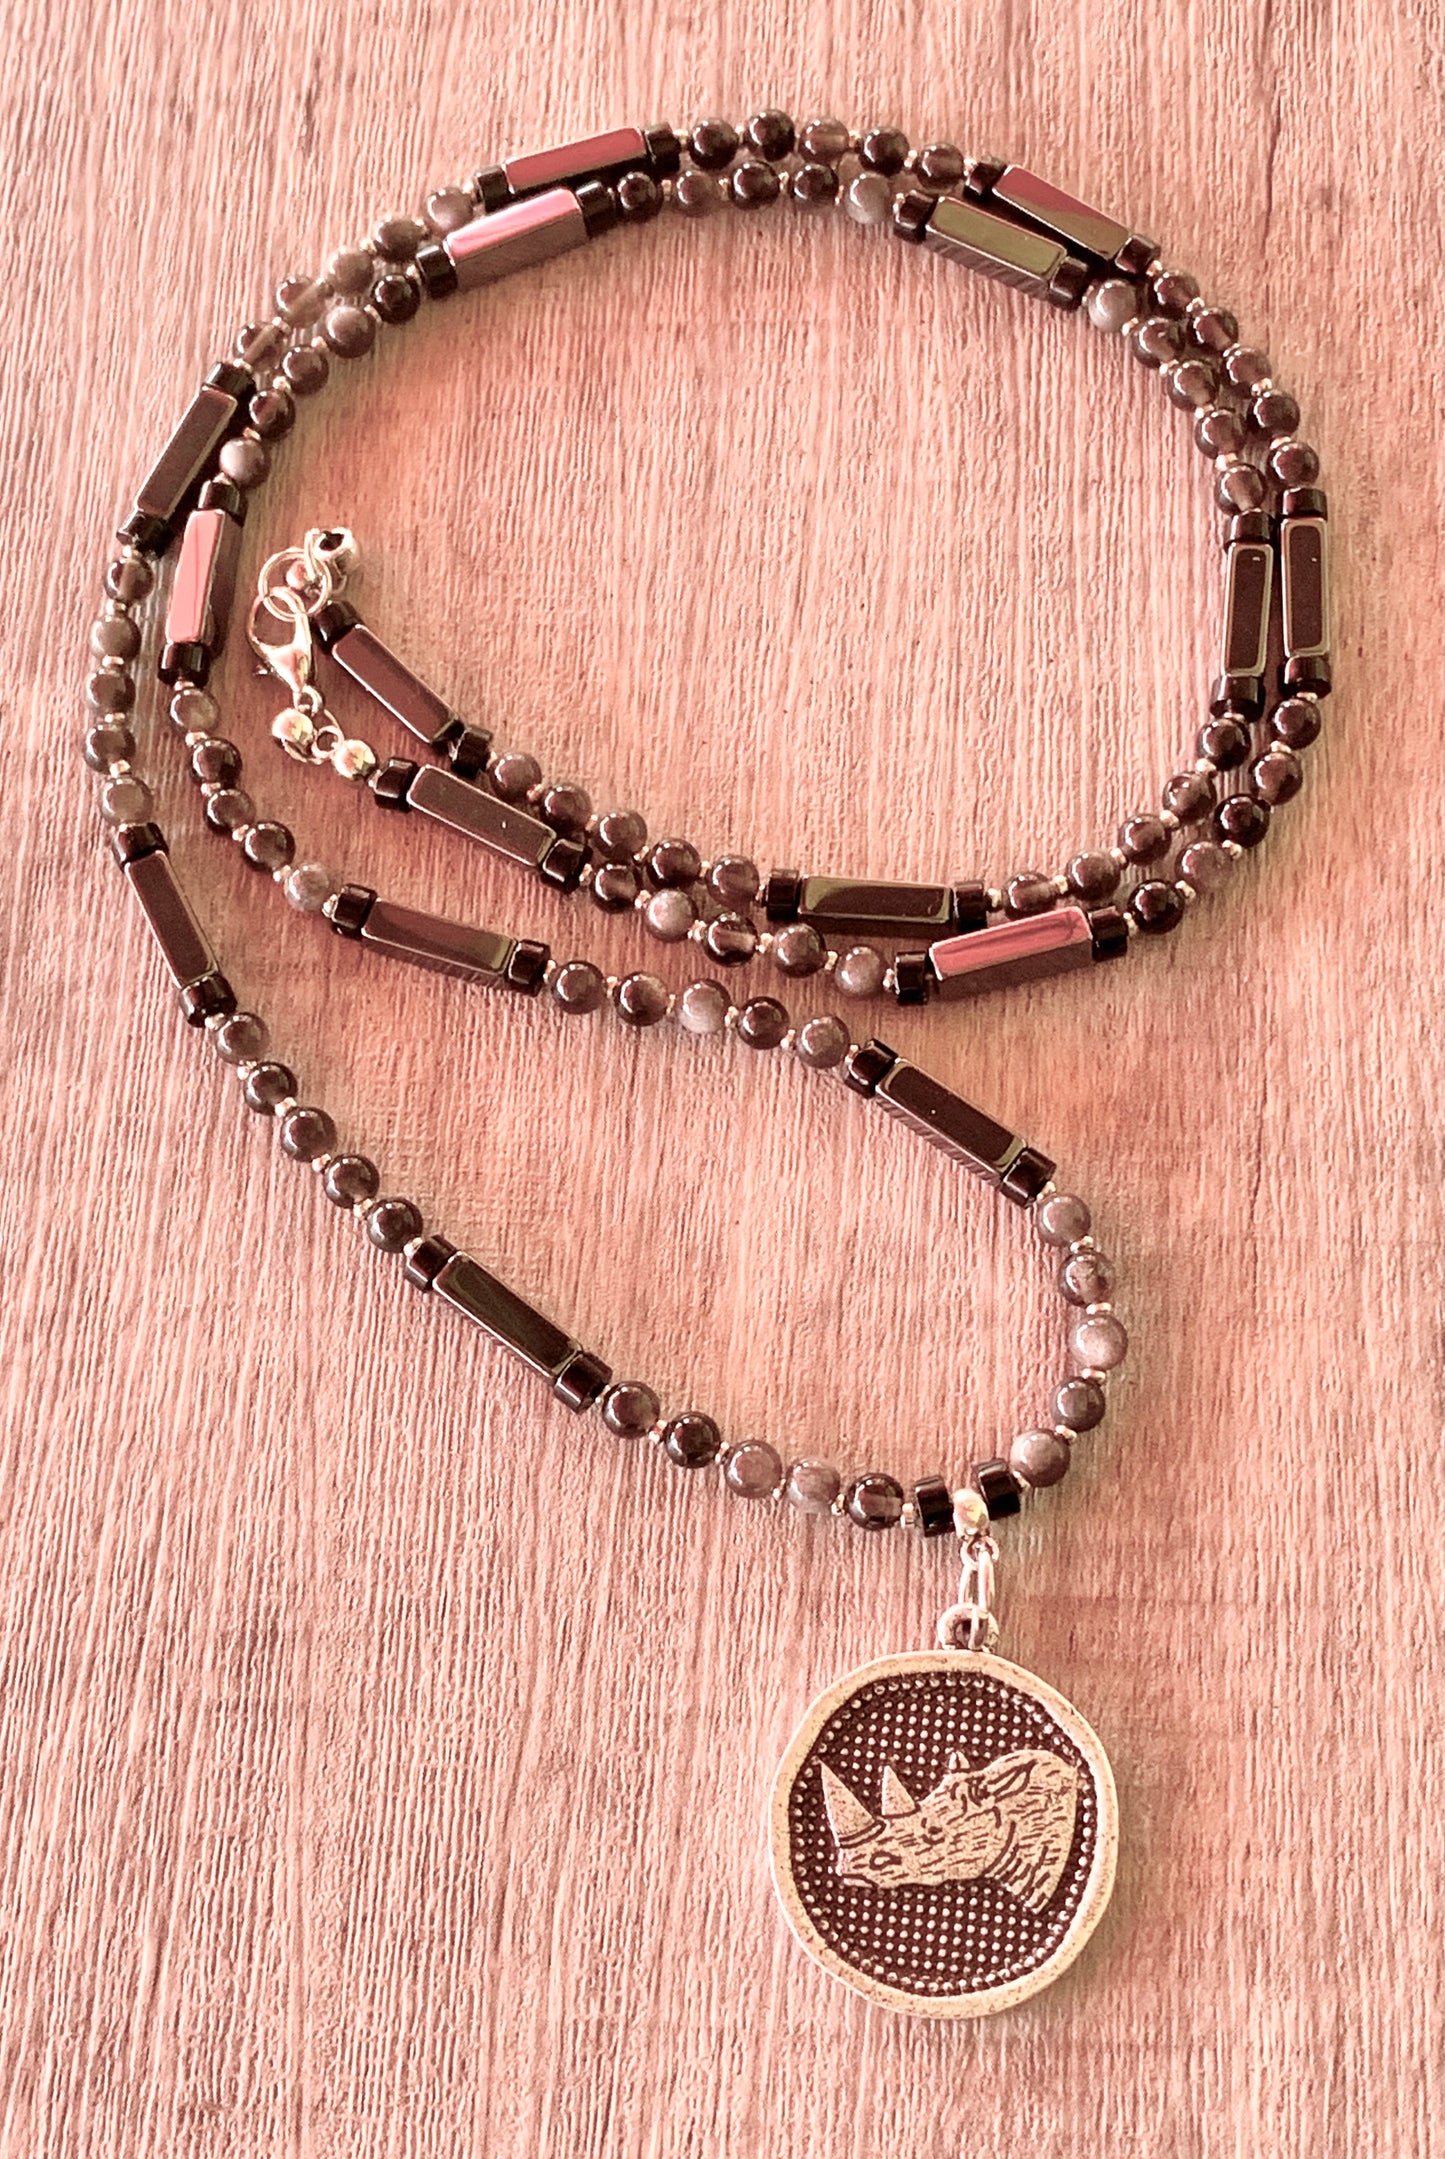 Sudan Handmade Silver Obsidian, Hematite, and Black Quartz 29" Necklace with Rhino Coin Pendant